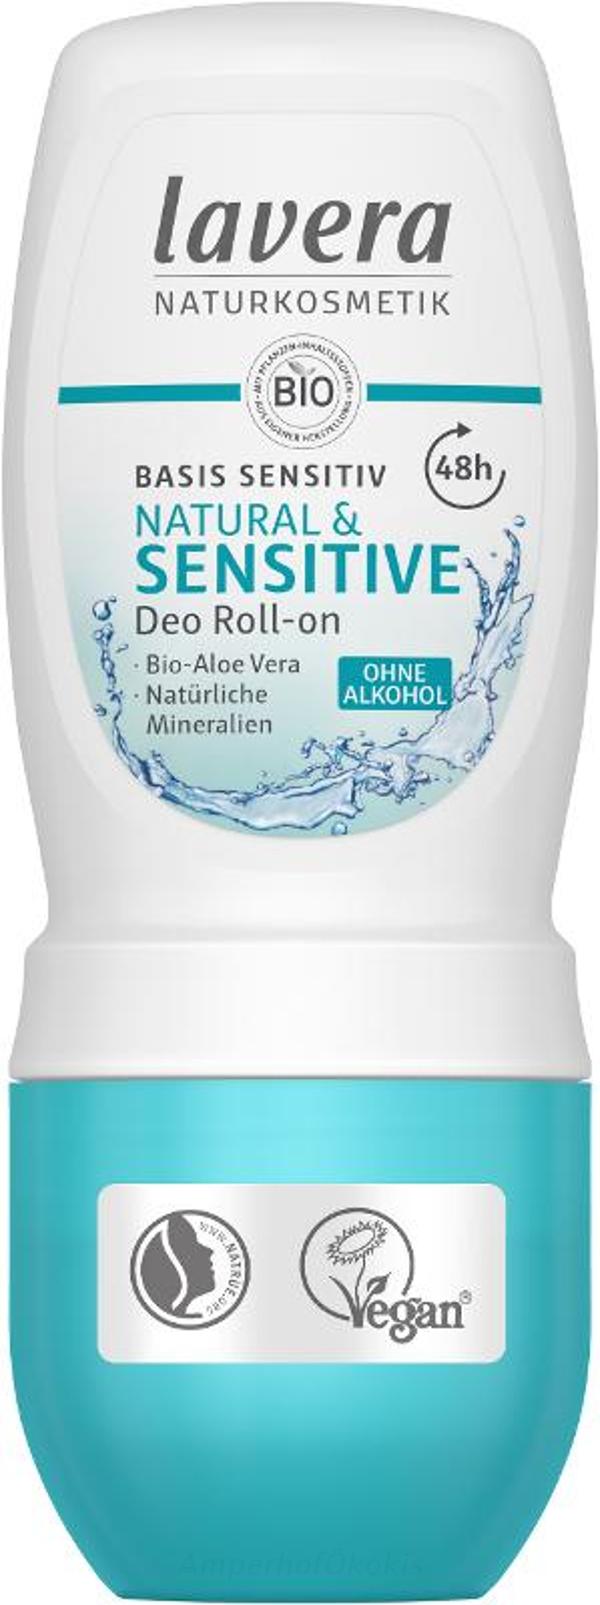 Produktfoto zu basis sensitiv Deo Roll on 50 ml